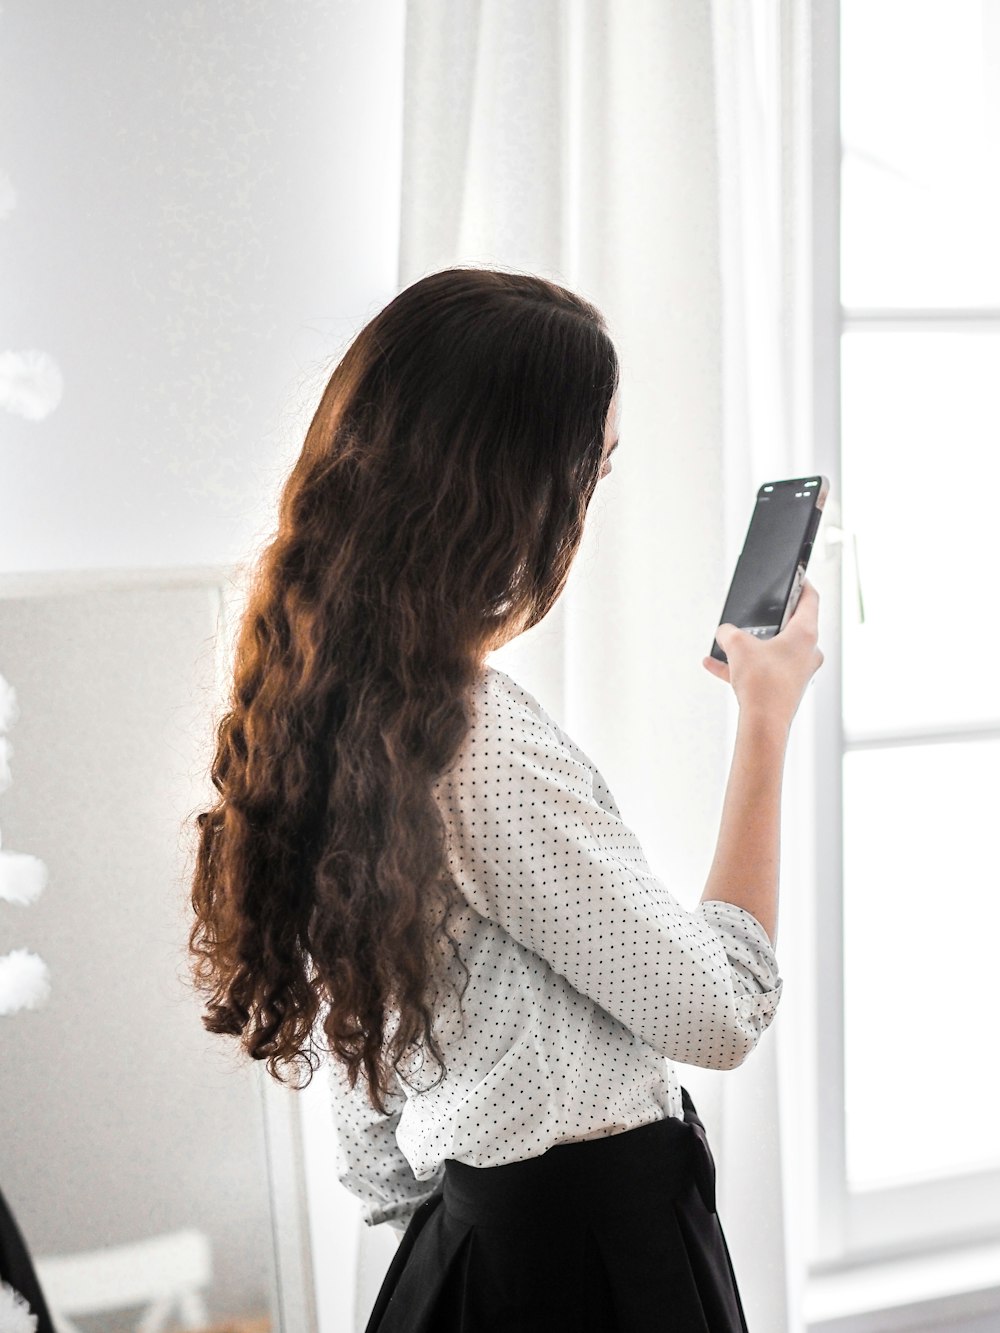 Frau in weiß-schwarzem Langarmshirt mit silbernem Smartphone